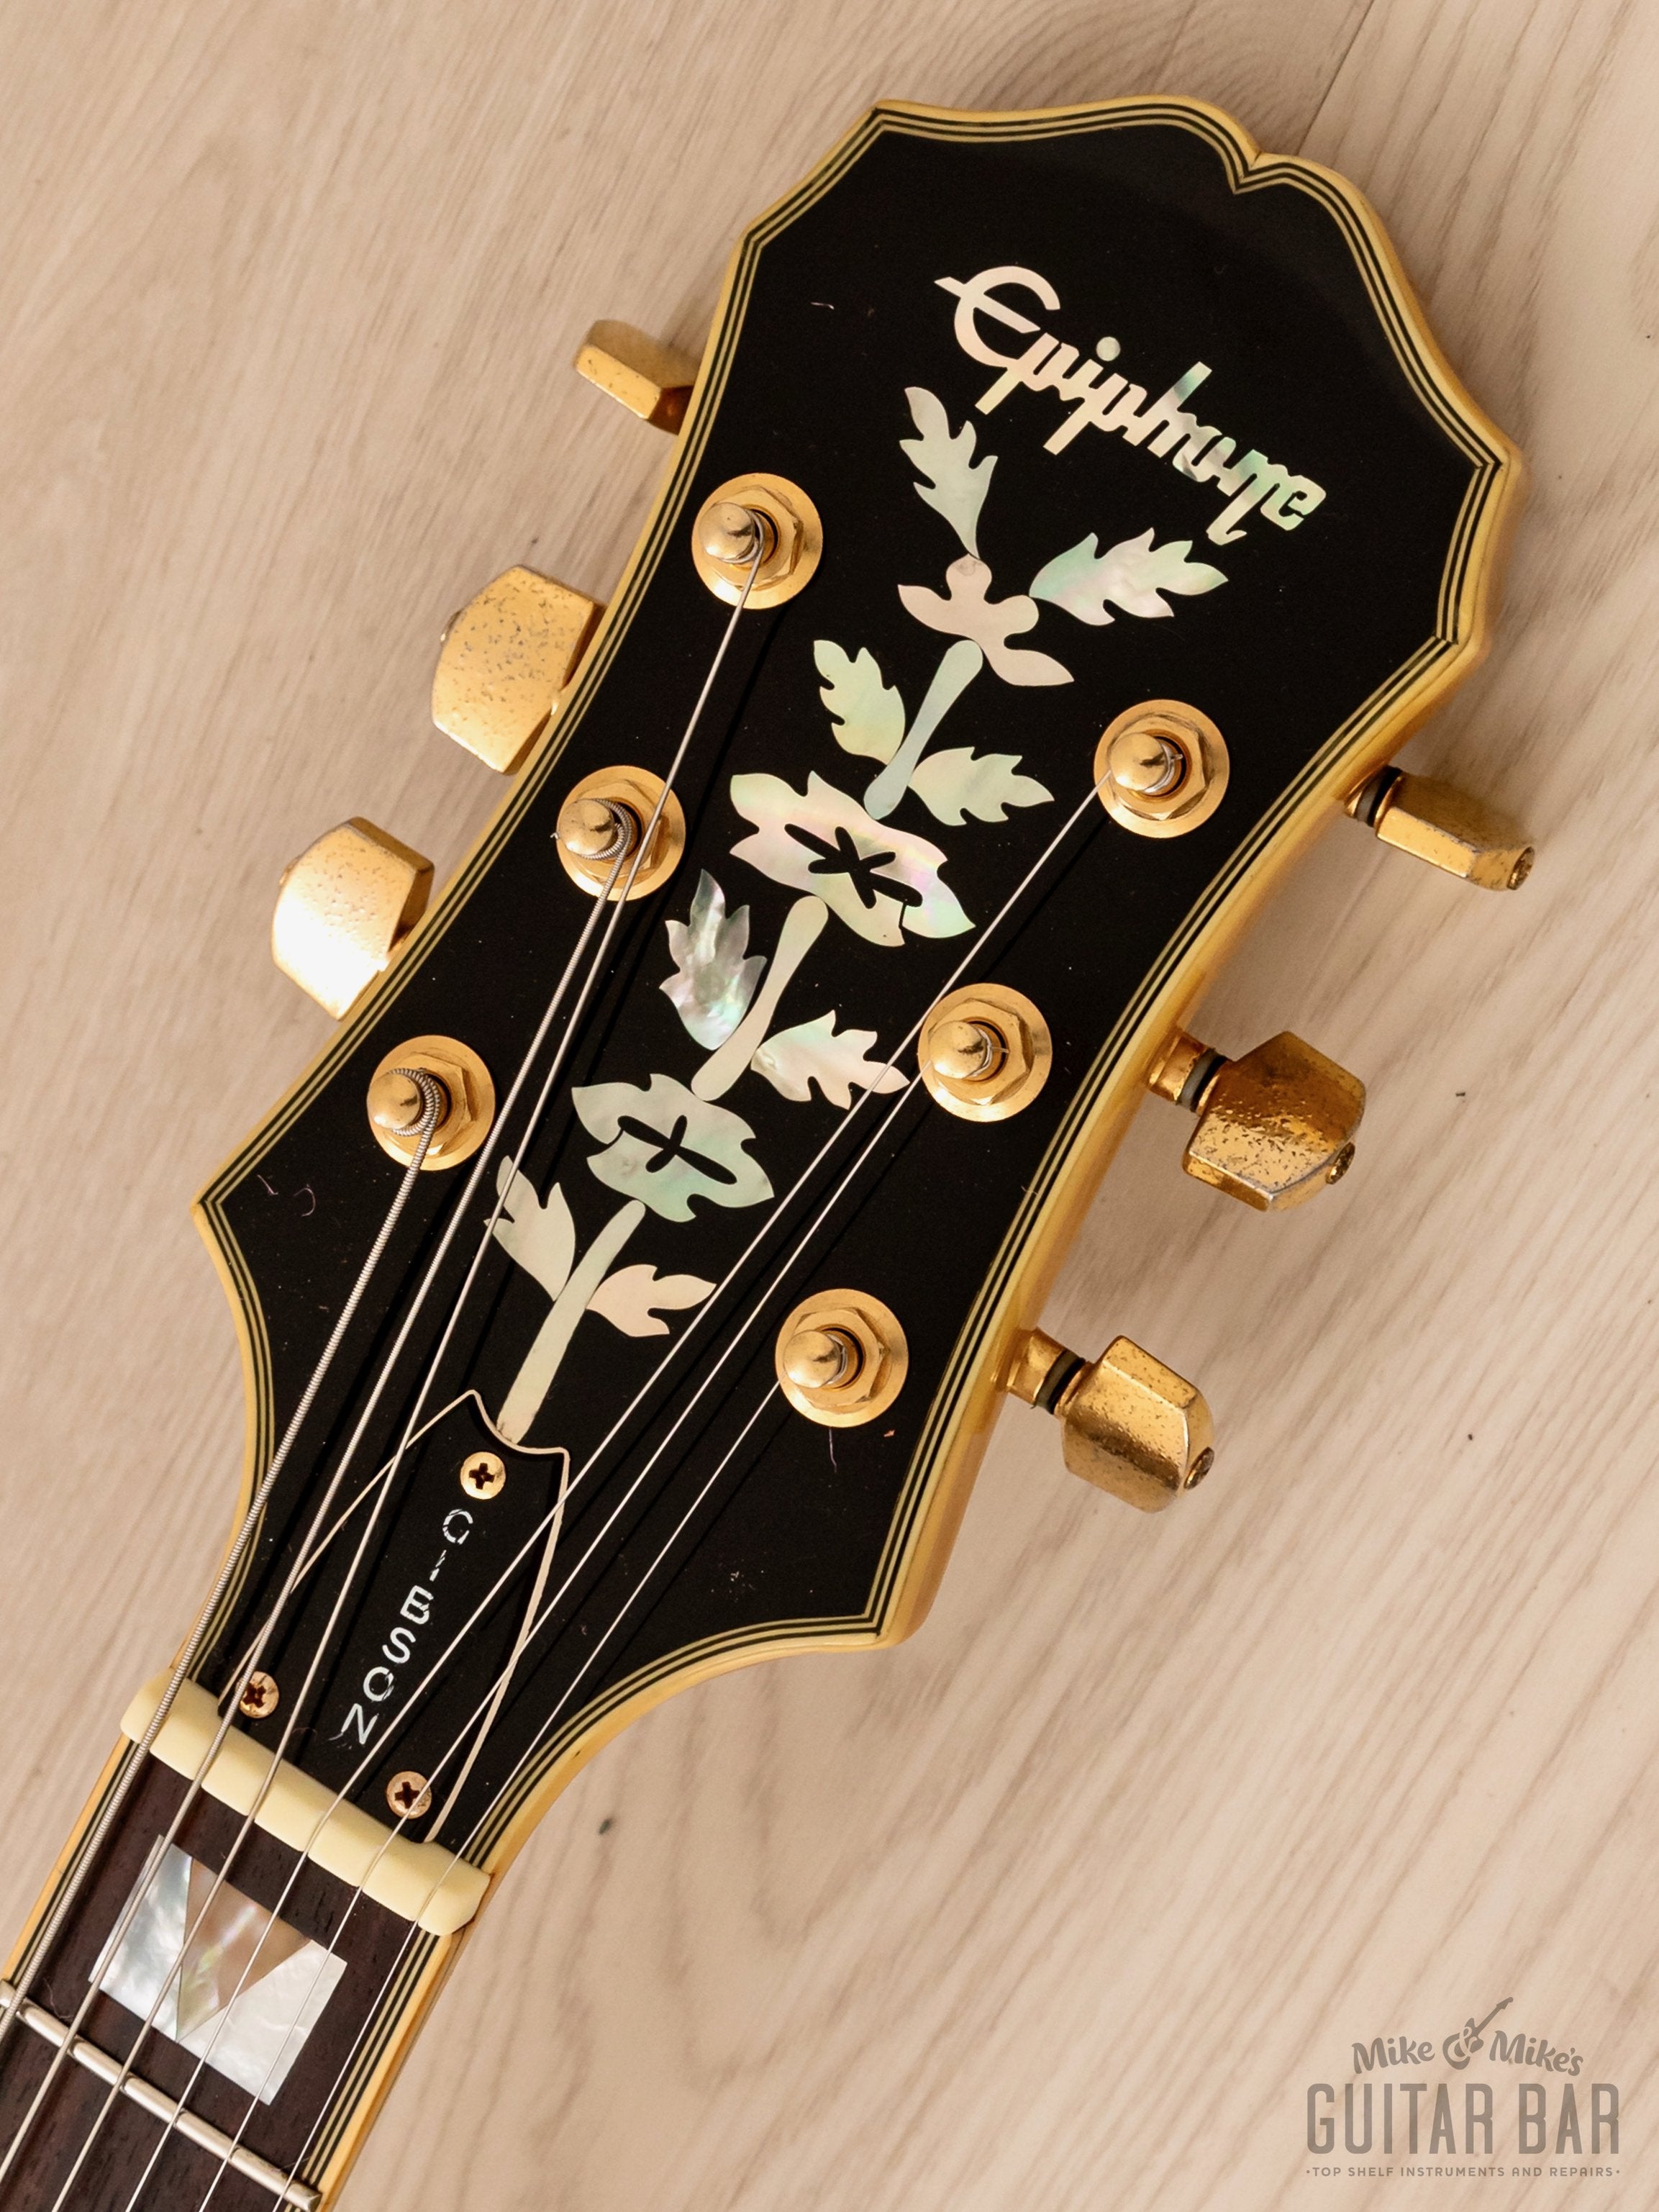 1995 Epiphone Sheraton Semi-Hollow Guitar Natural, Near-Mint w/ Case